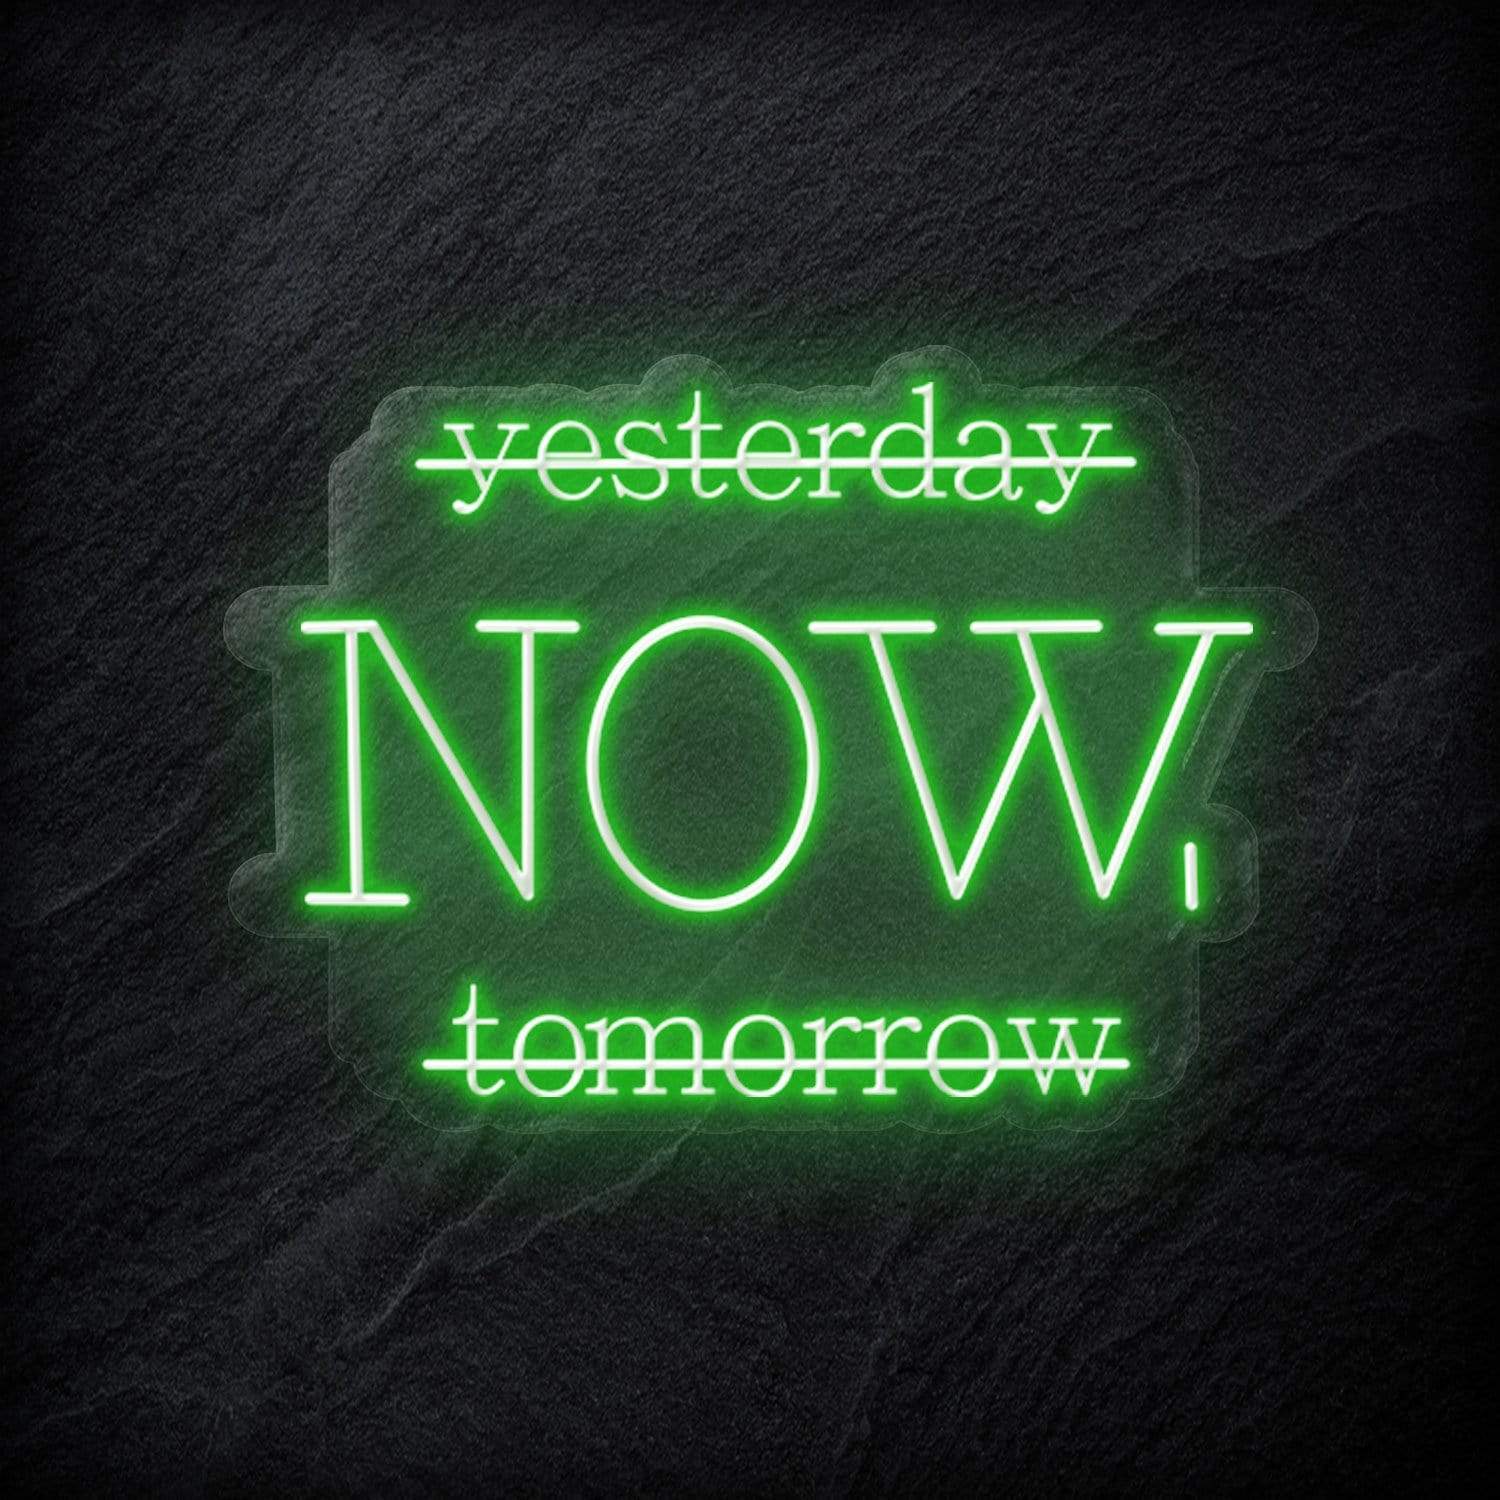 "Yesterday Now" LED Neon Schriftzug - NEONEVERGLOW